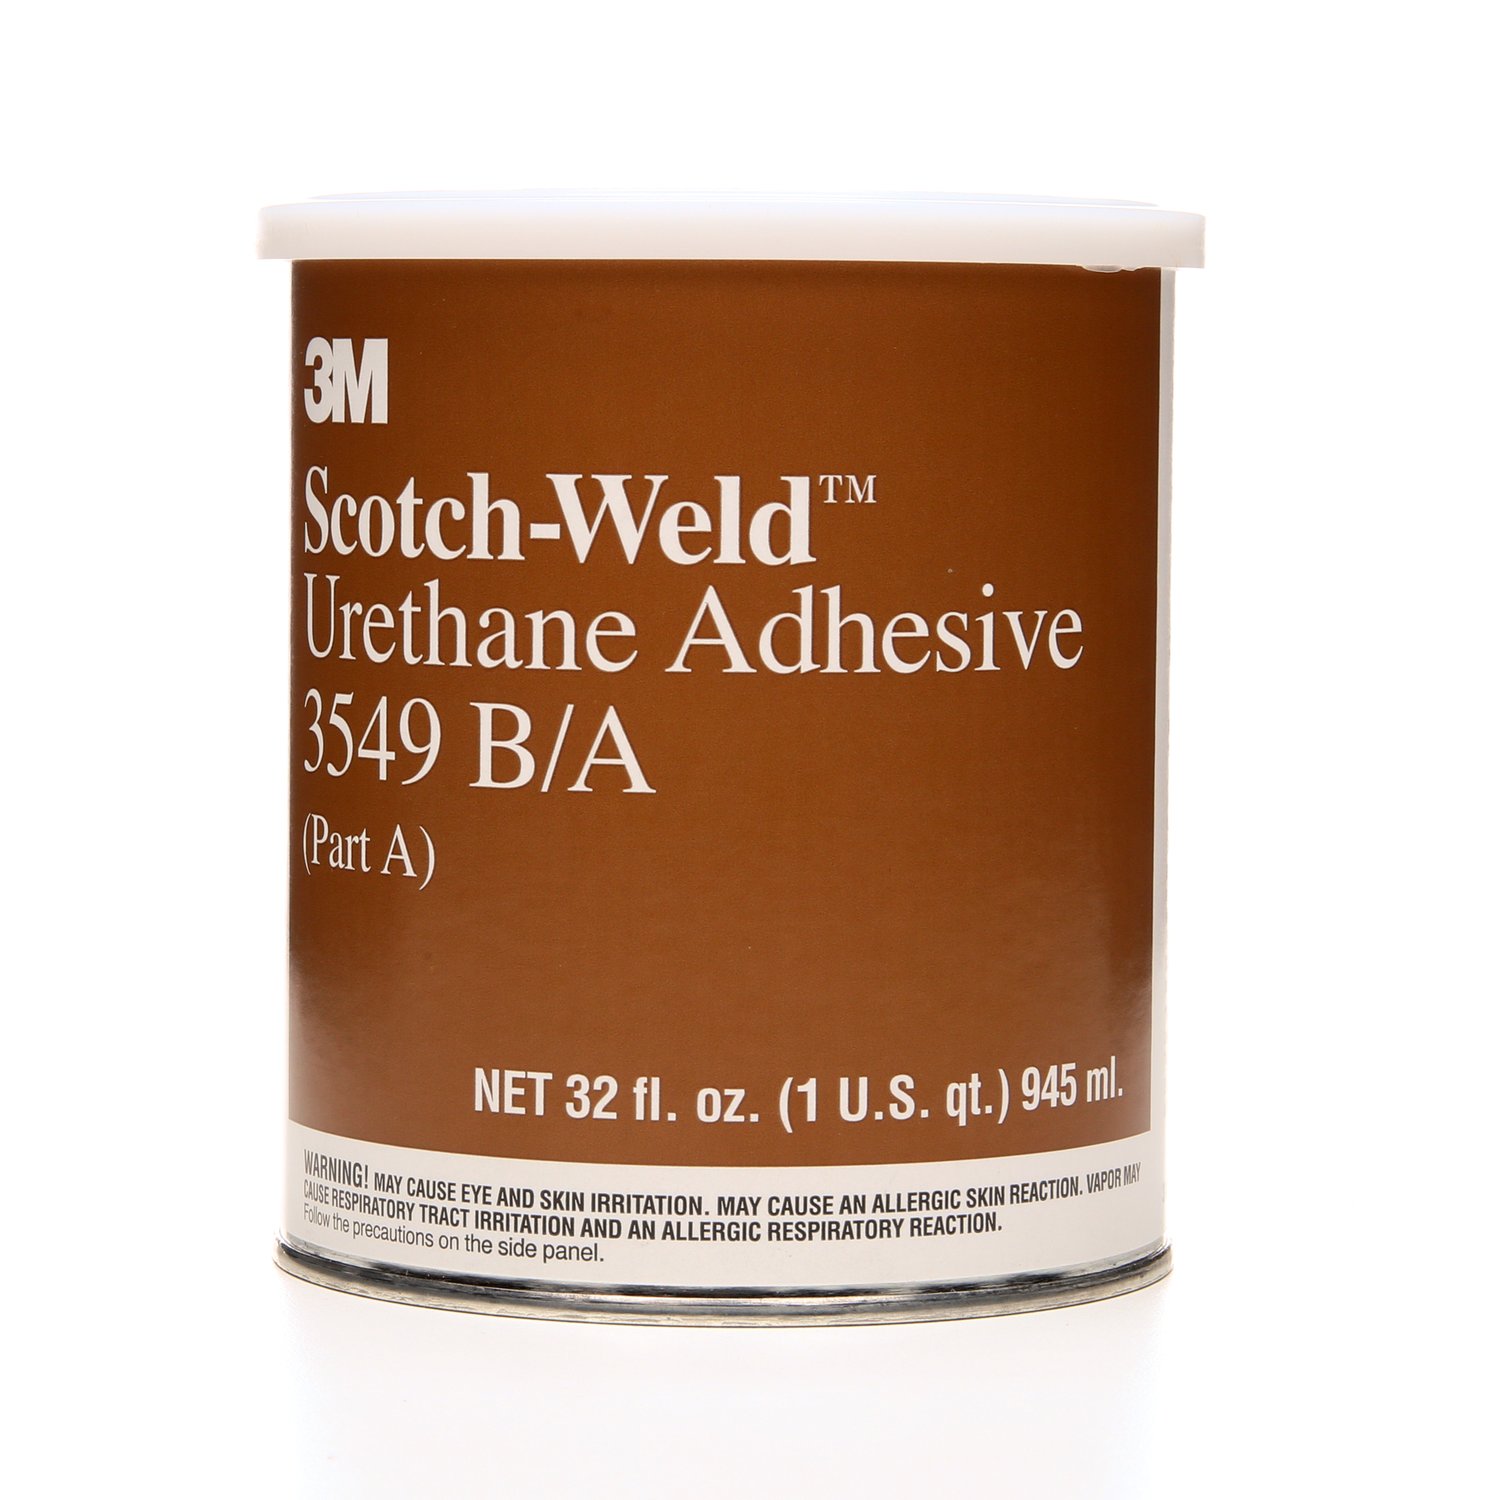 00021200209024  3M Scotch-Weld Urethane Adhesive 3549, Brown